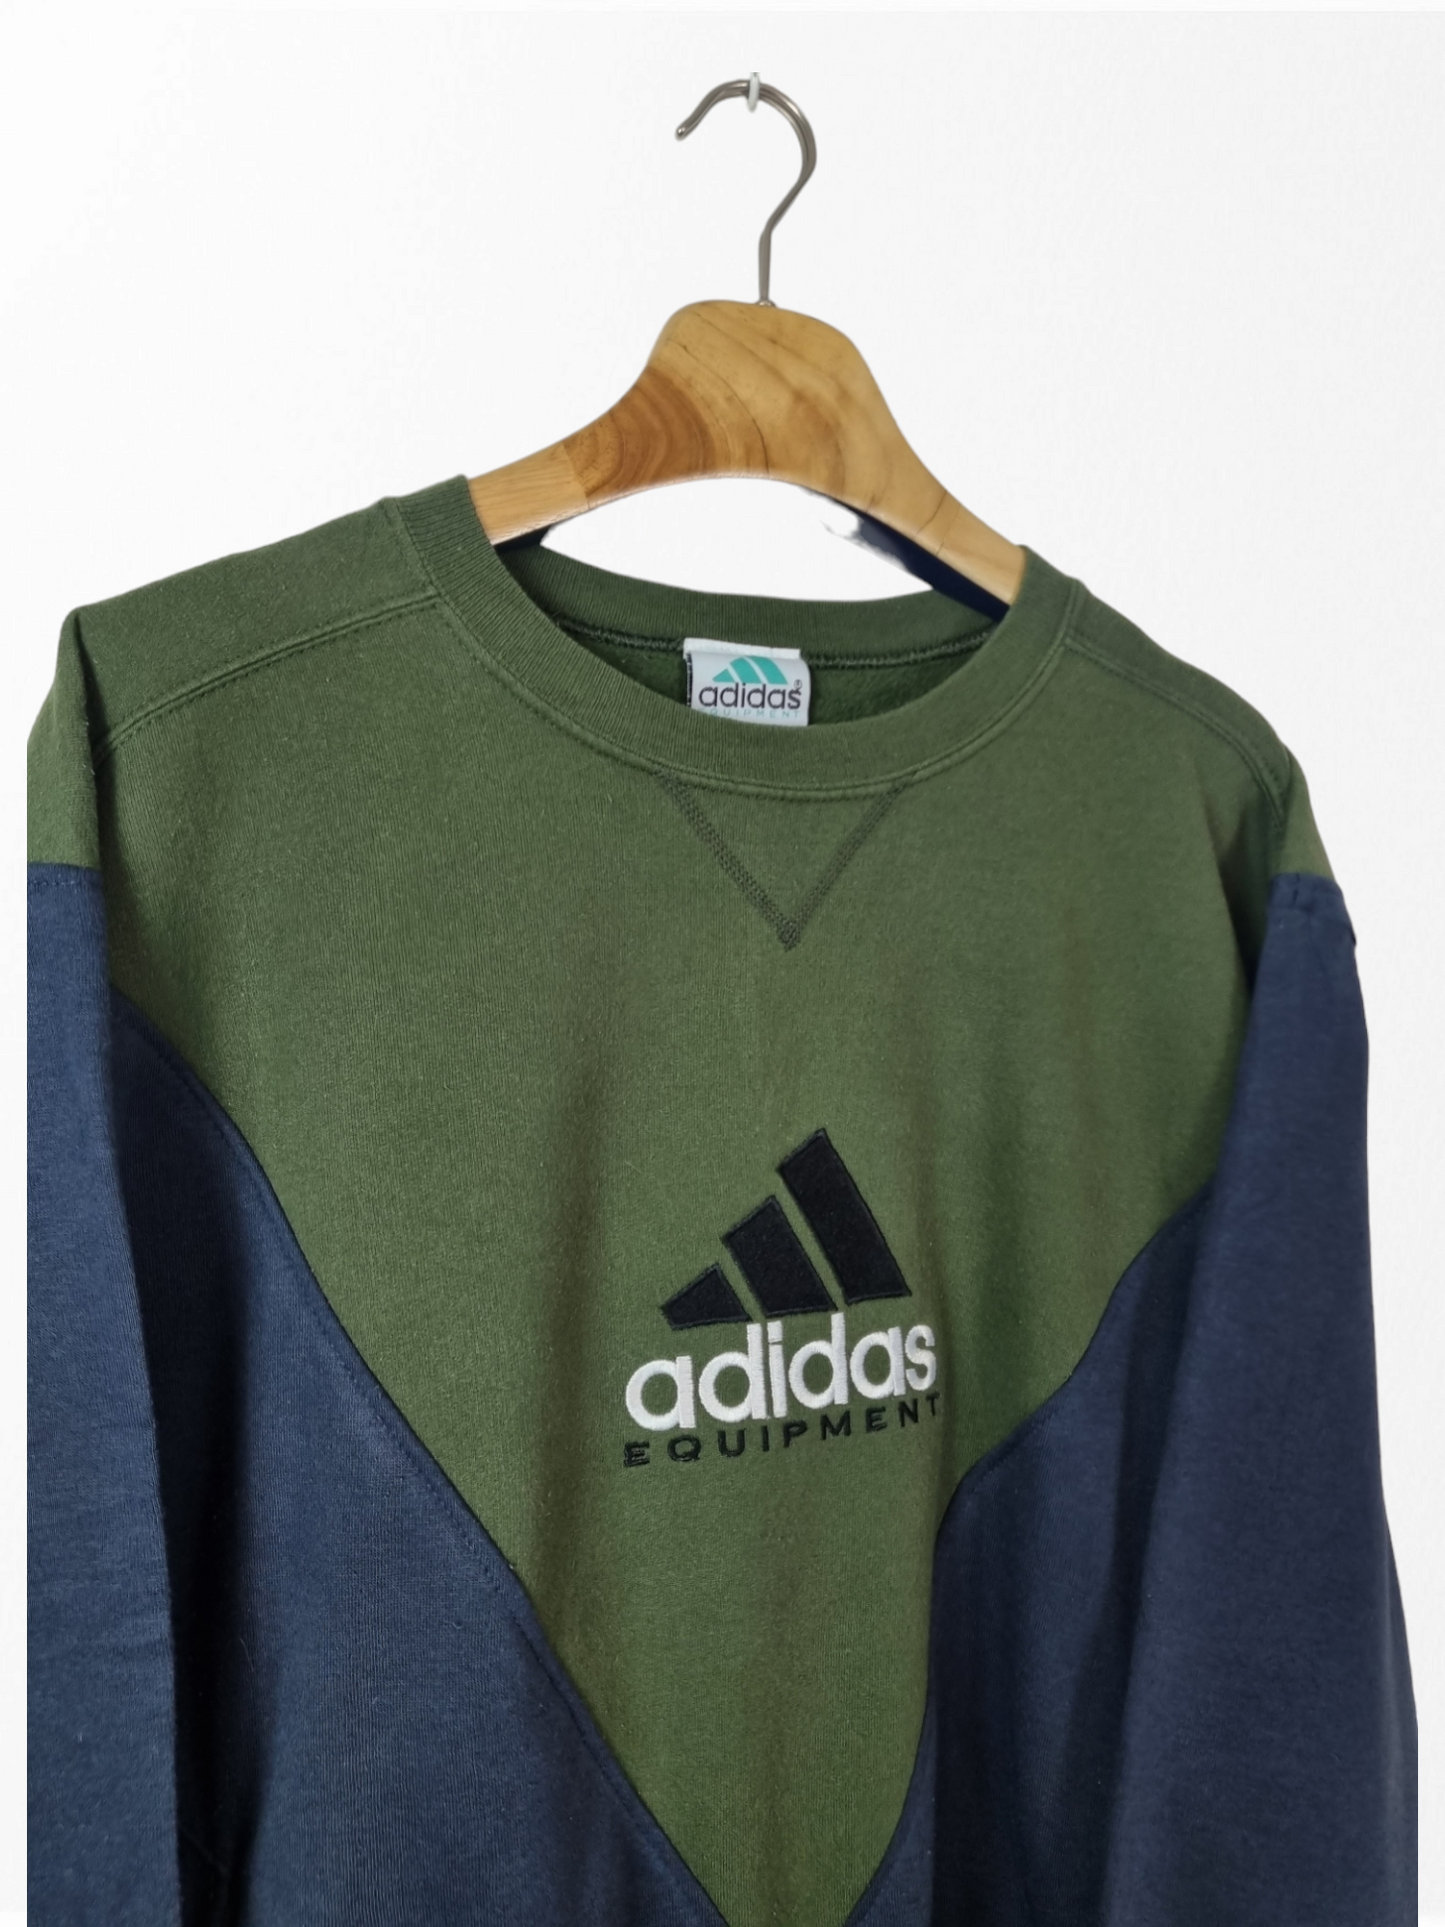 Adidas 90s equipement sweater maat L